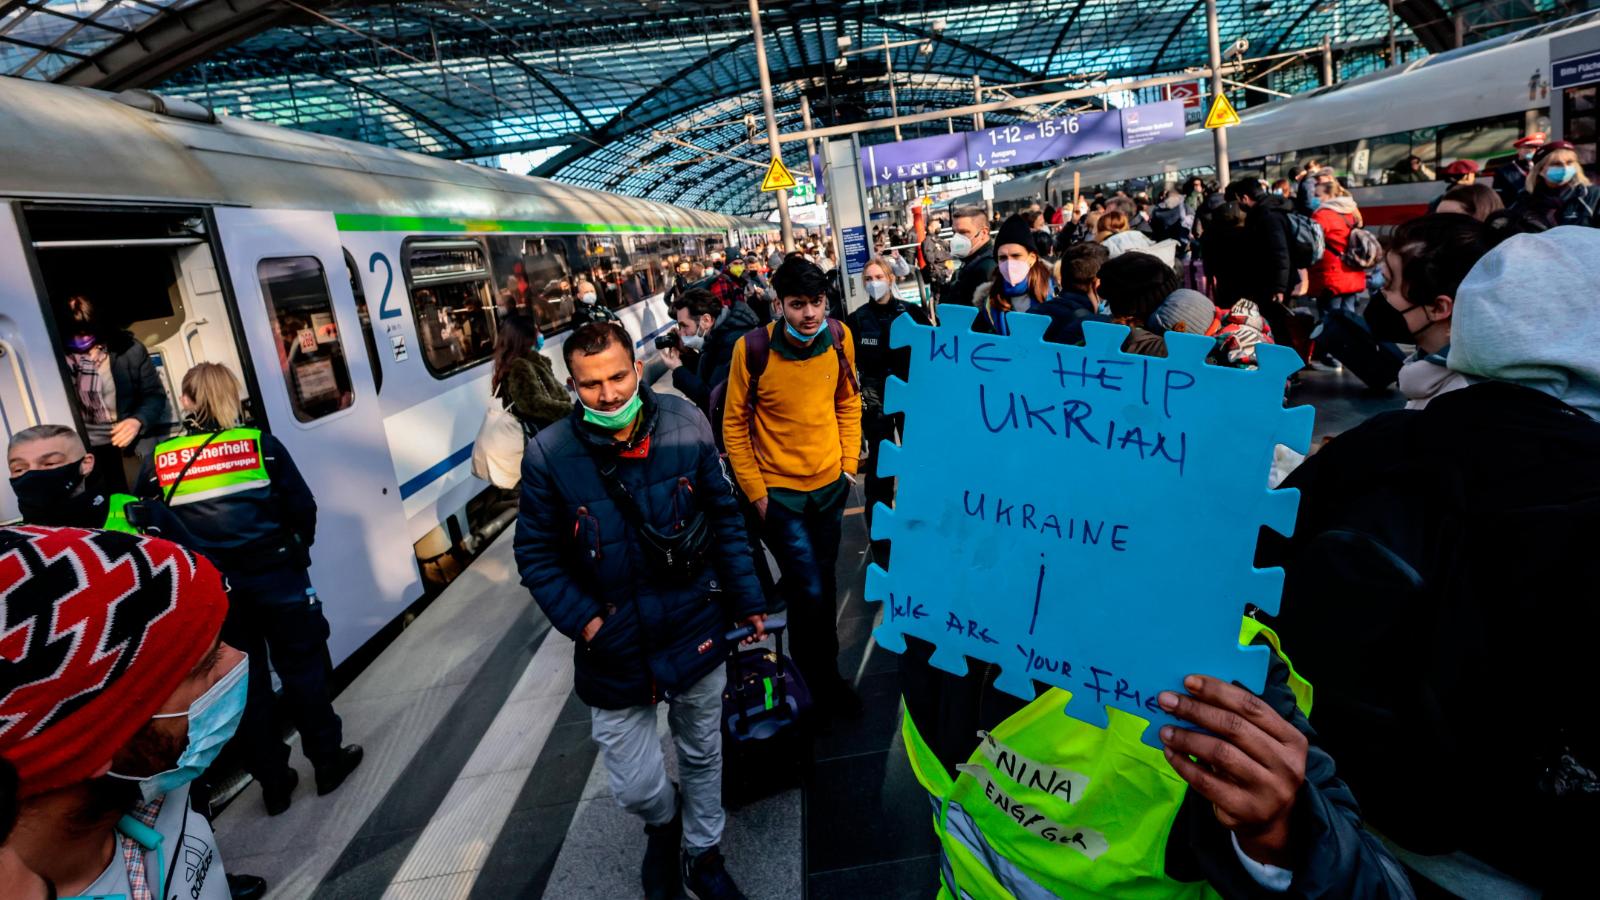 Refugiada ucraniana en México espera regresar a su país